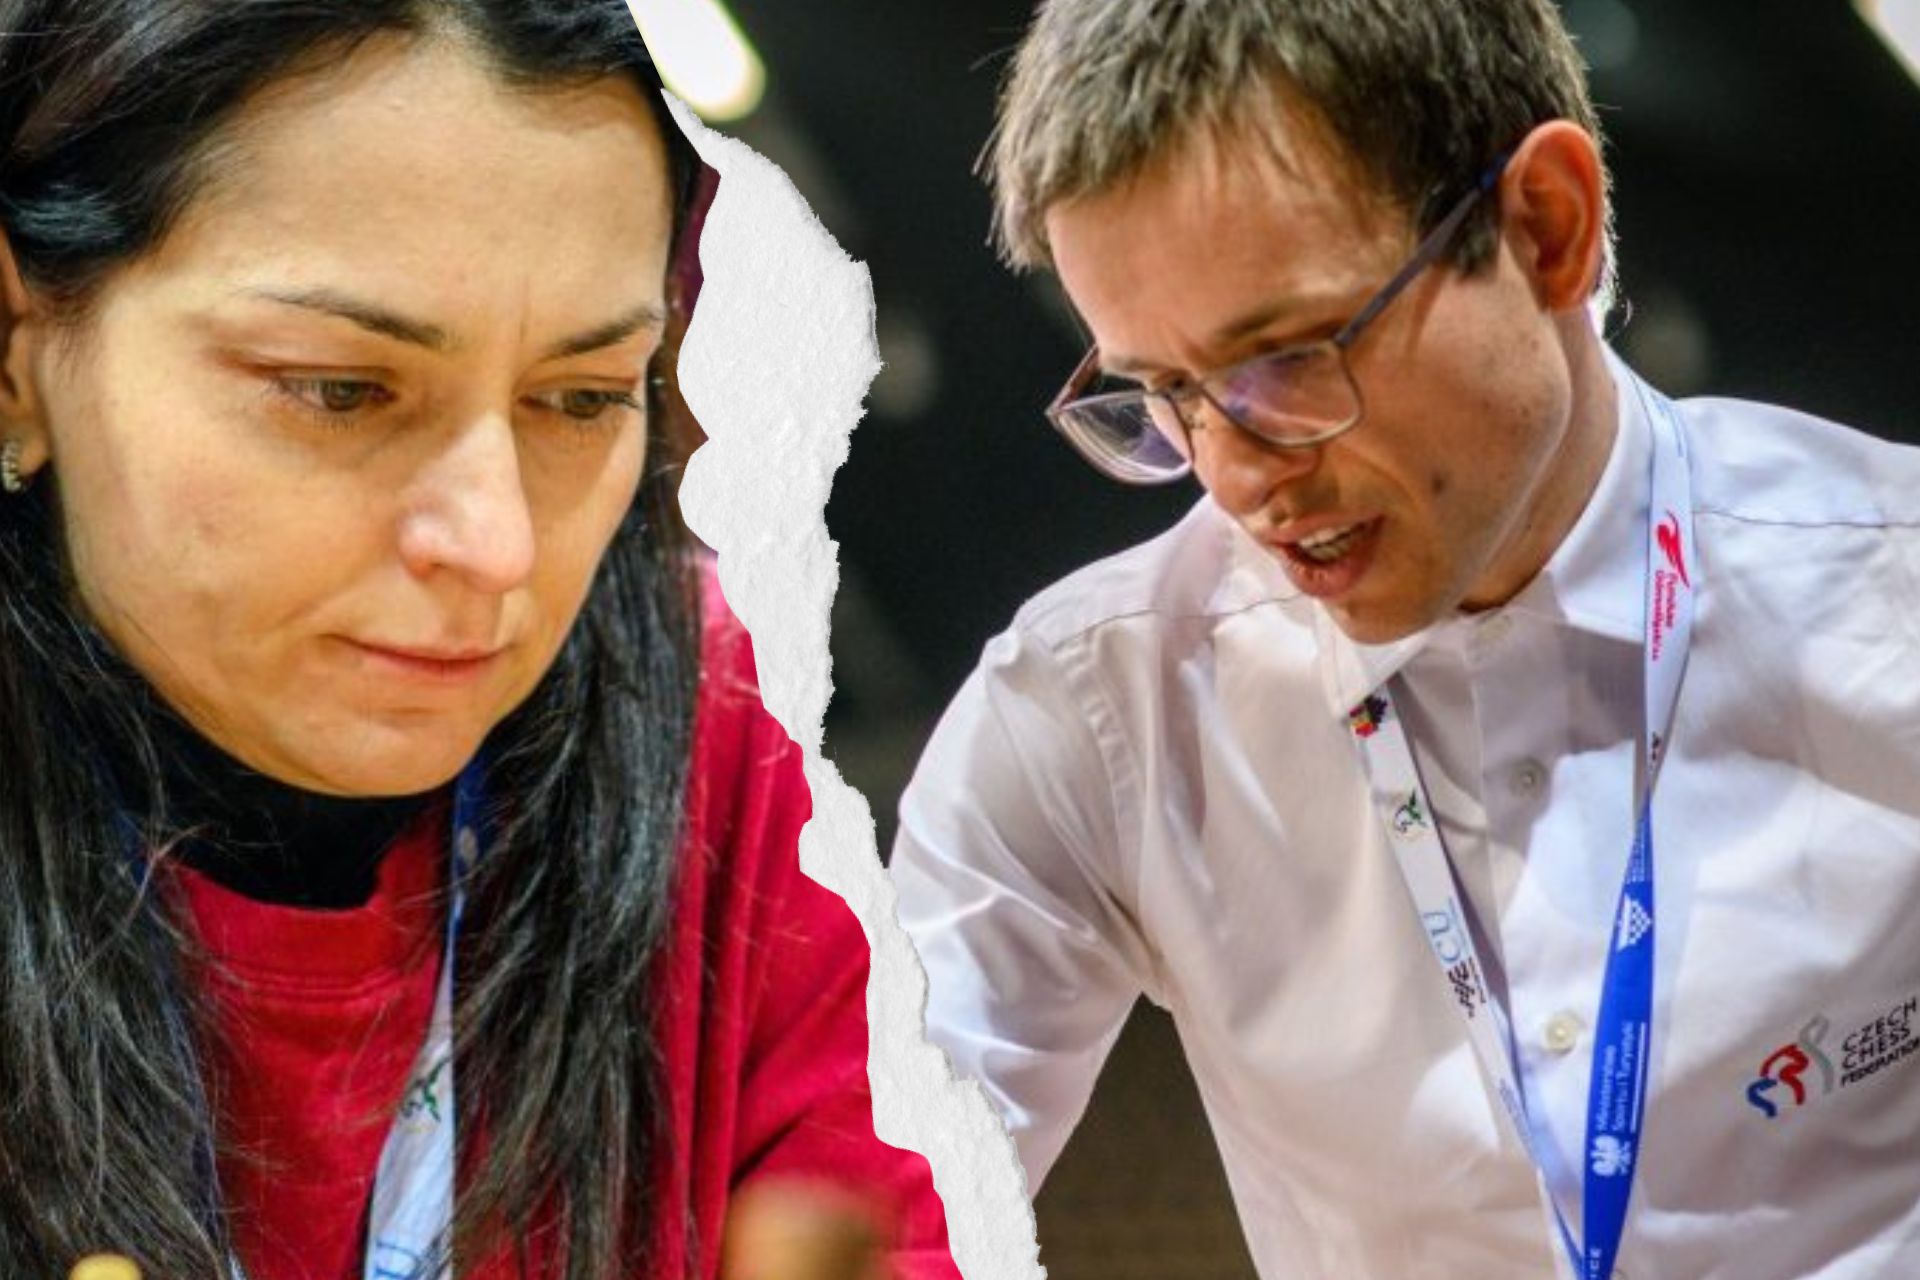 2022 European Blitz and Rapid Chess Championships